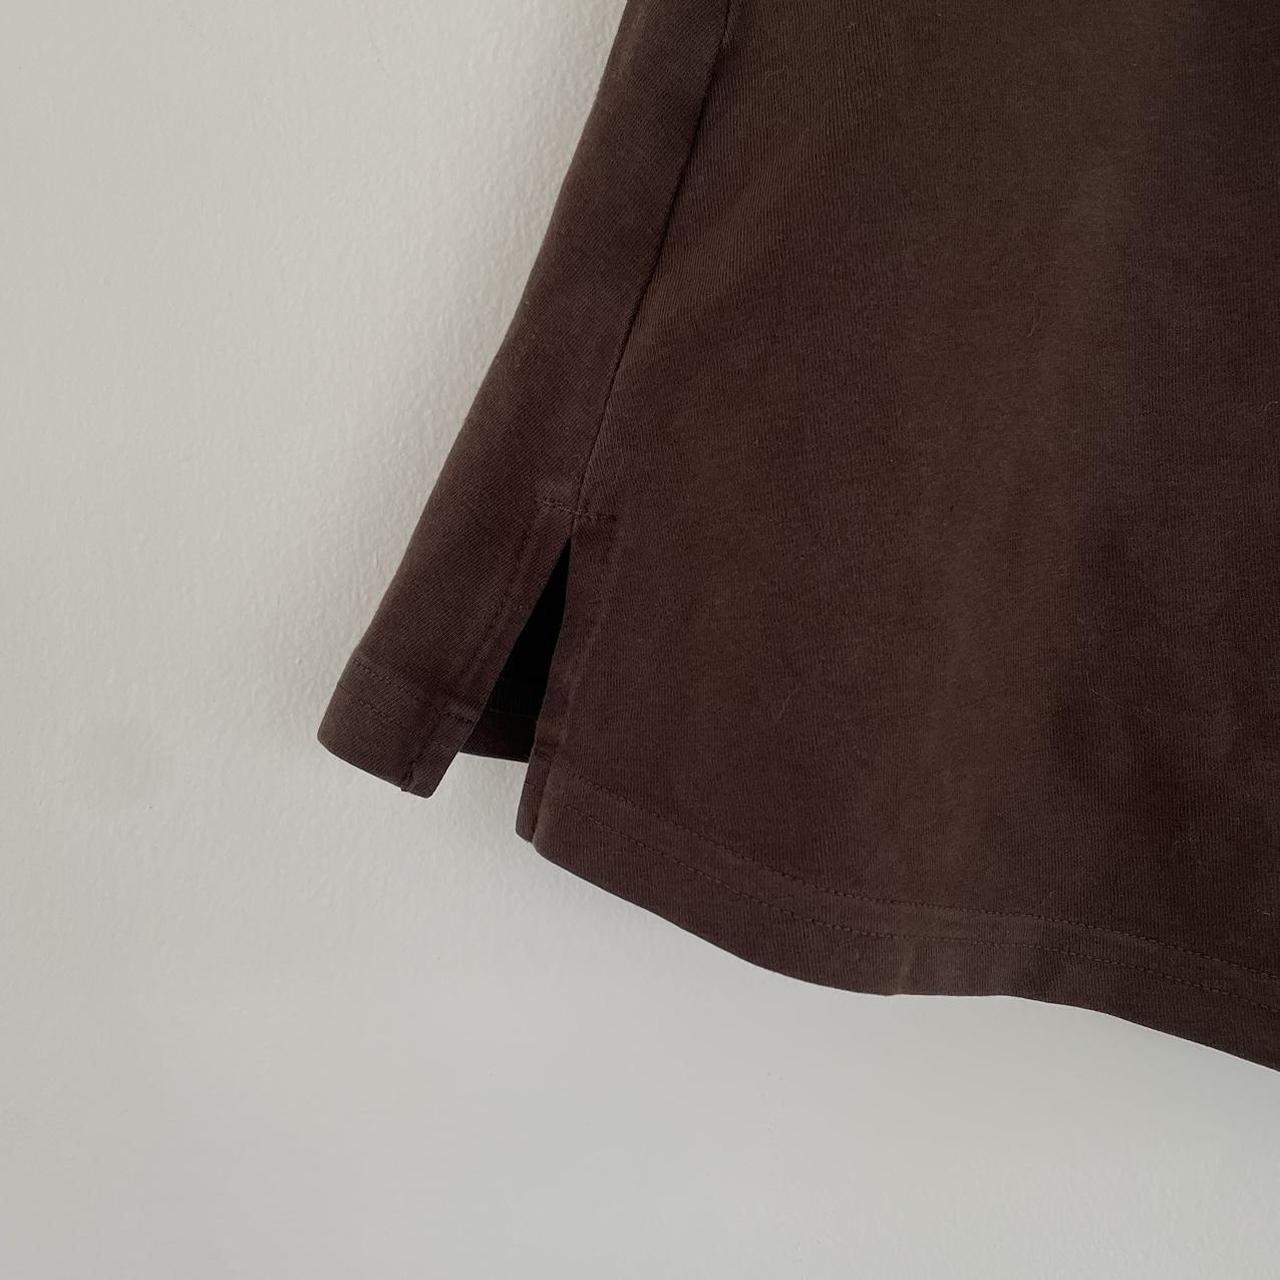 American Apparel Women's Brown Skirt (4)